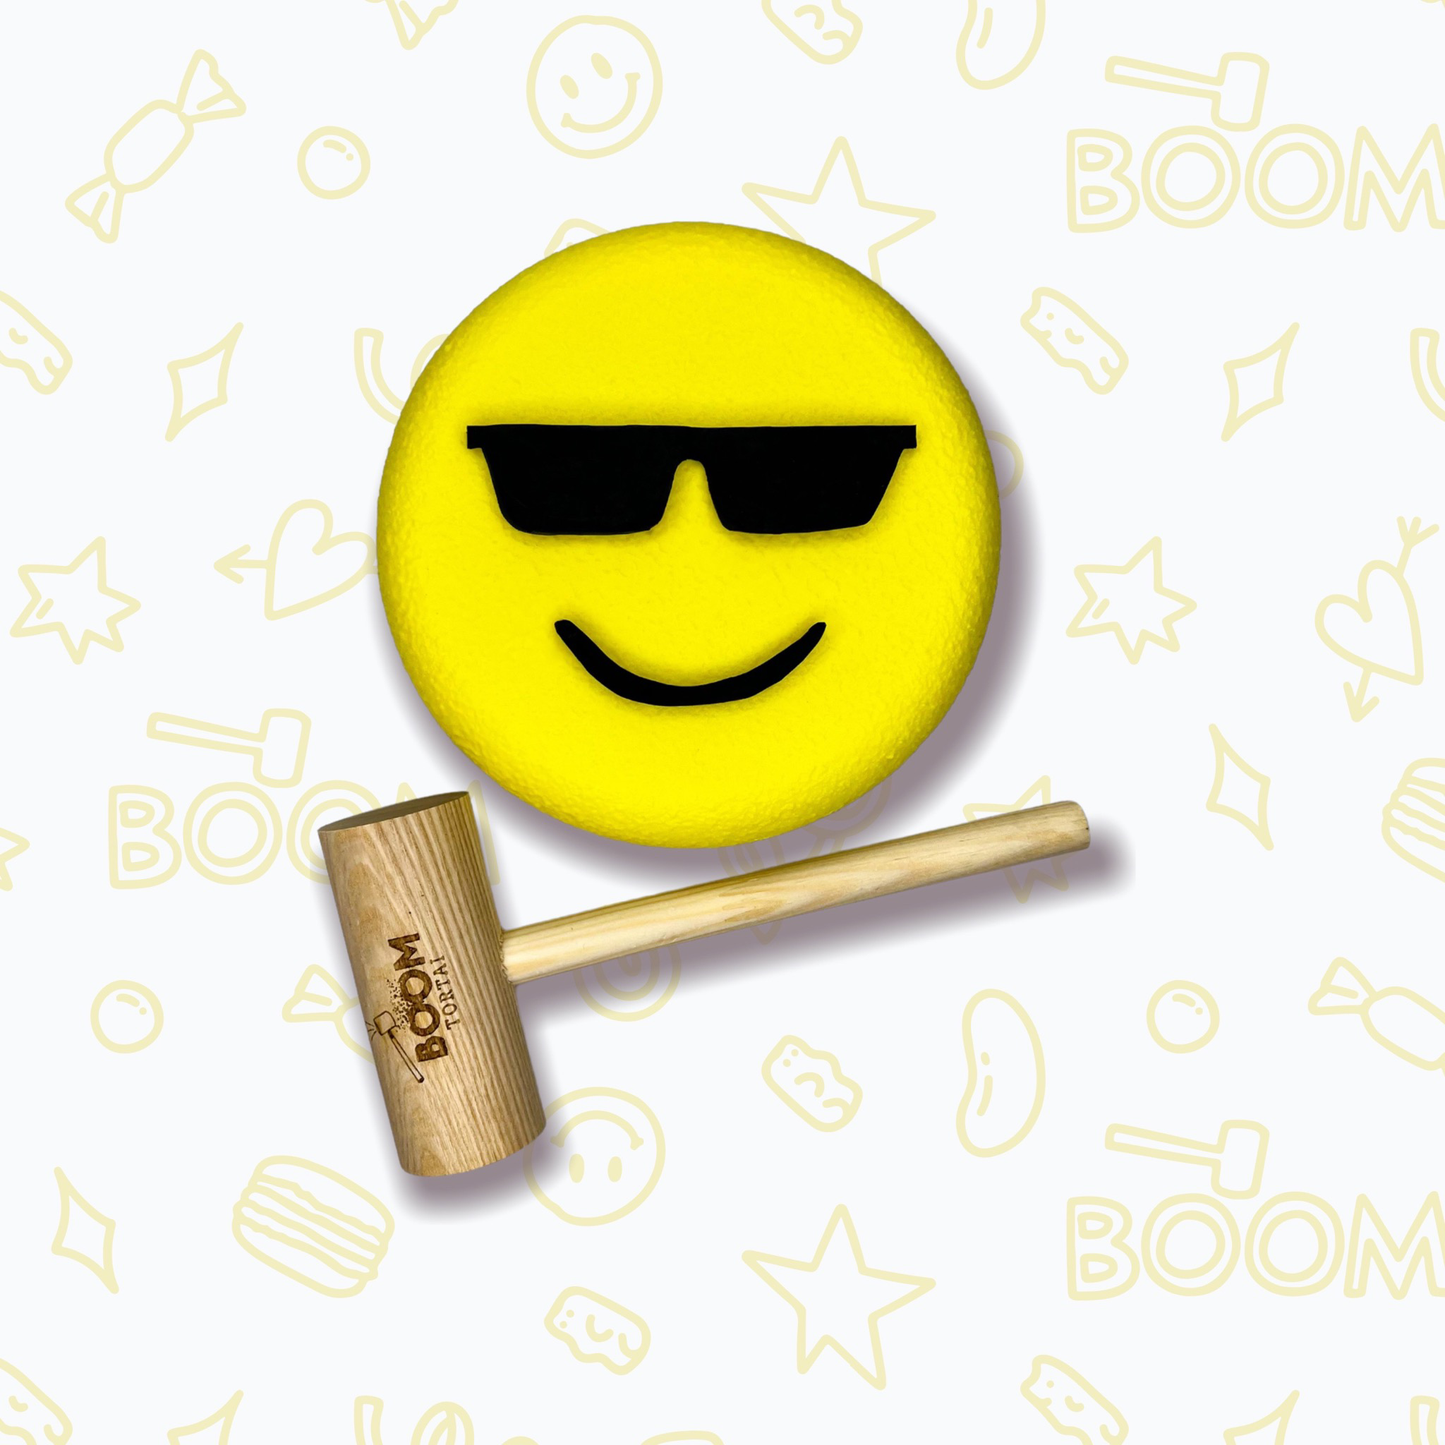 Emoji Boom!